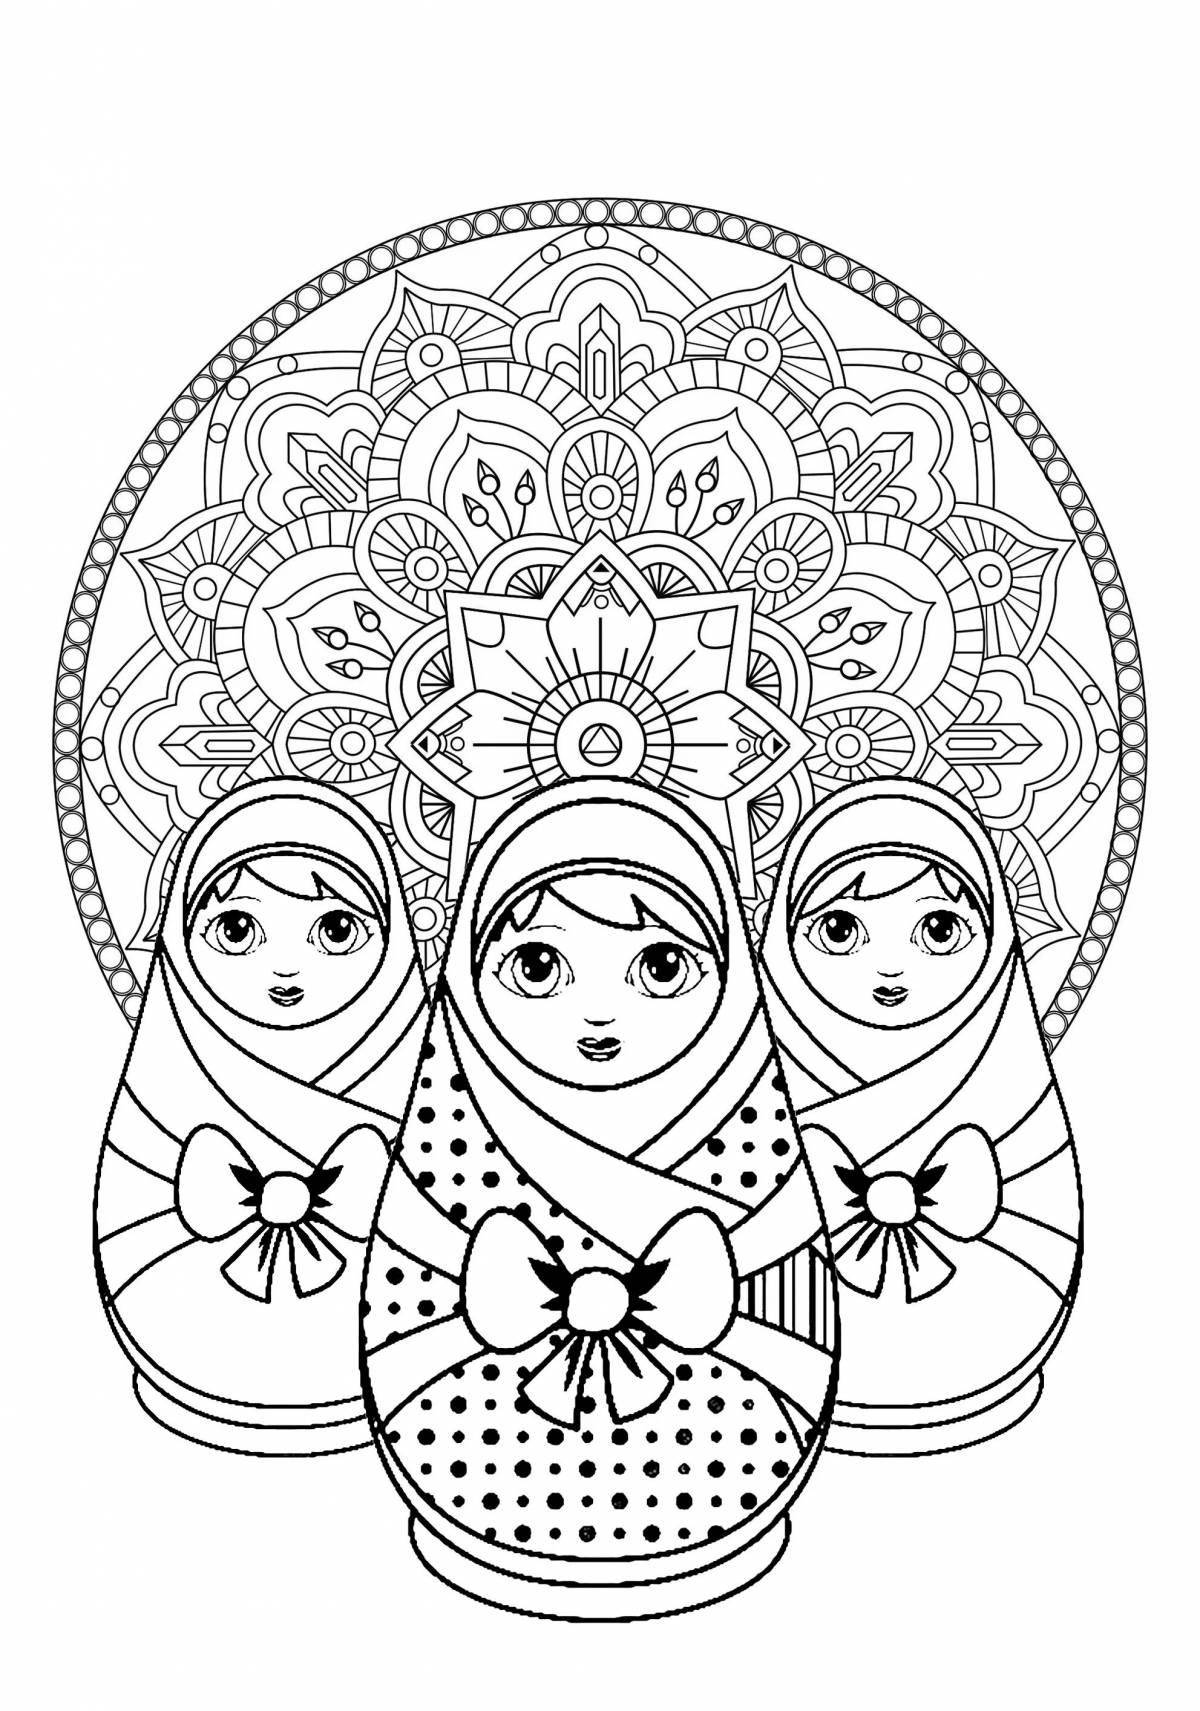 Fancy matryoshka symbol coloring book